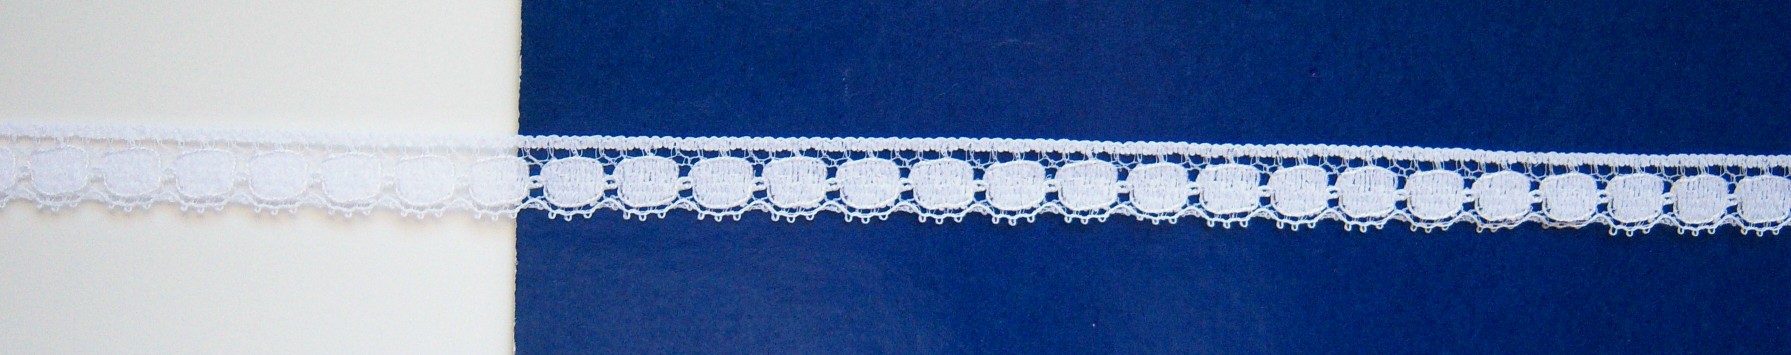 White 3/8" Nylon Lace